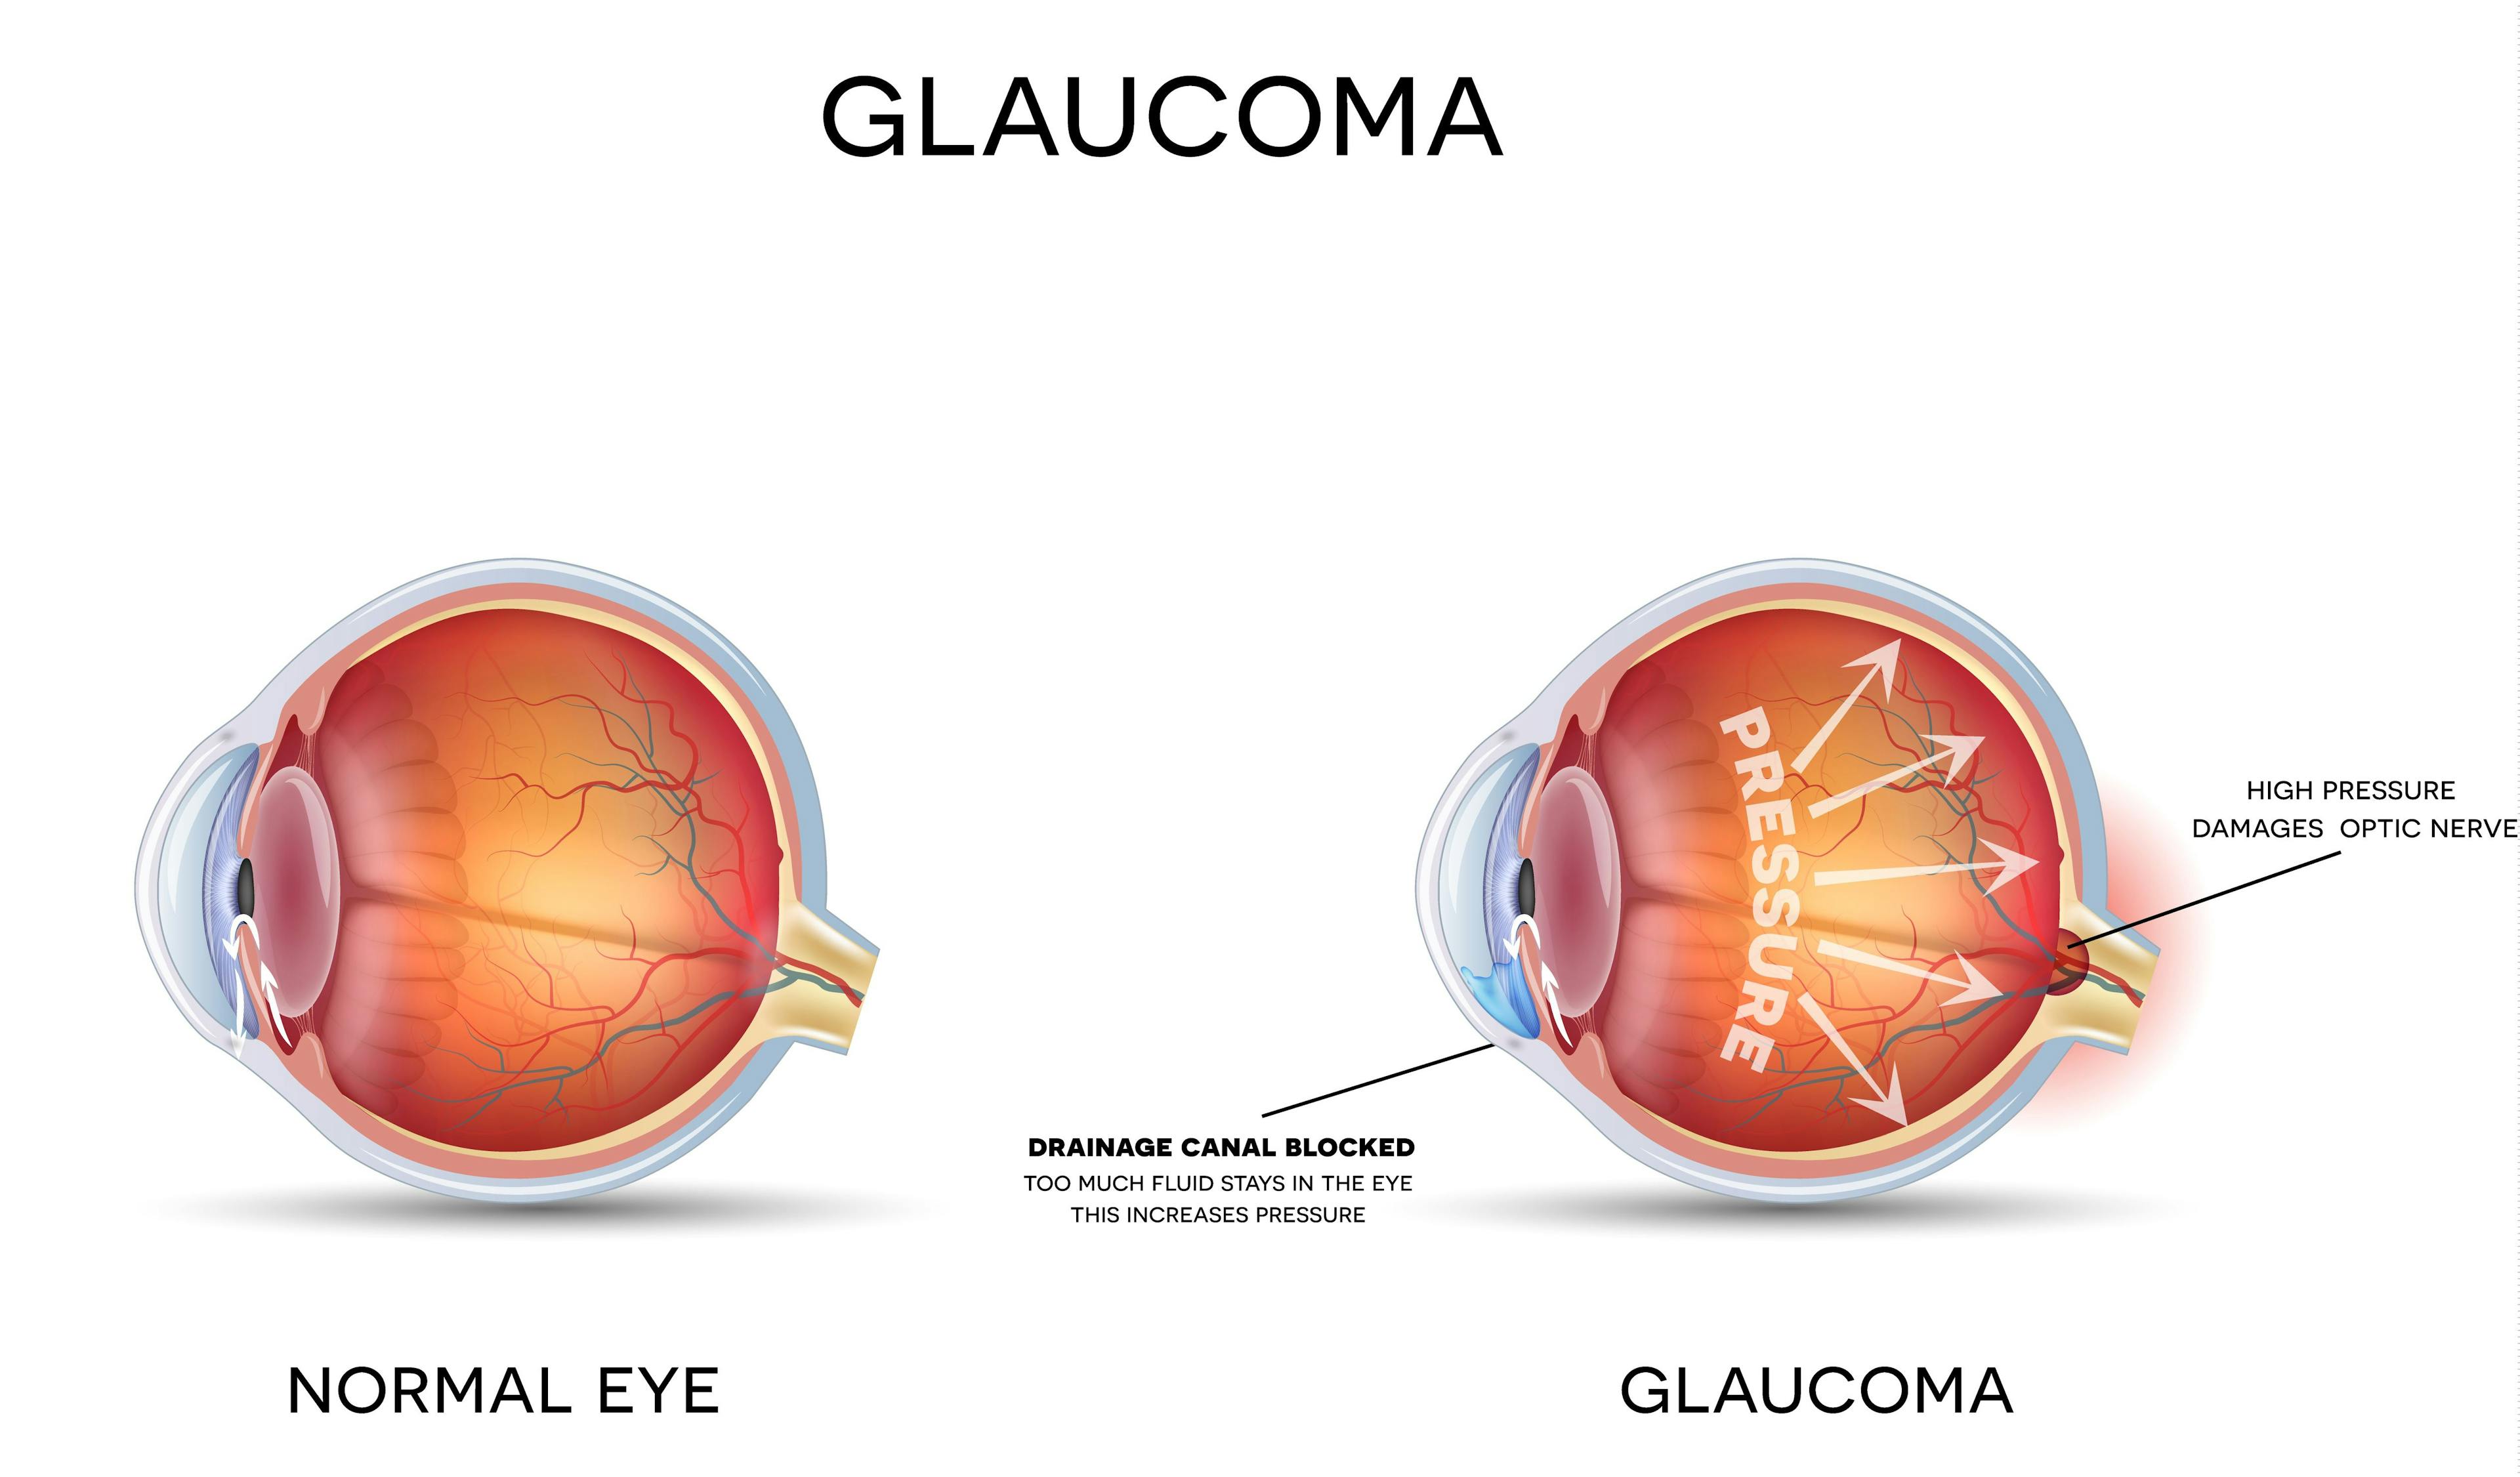 Glaucoma | Image credit: reineg - stock.adobe.com